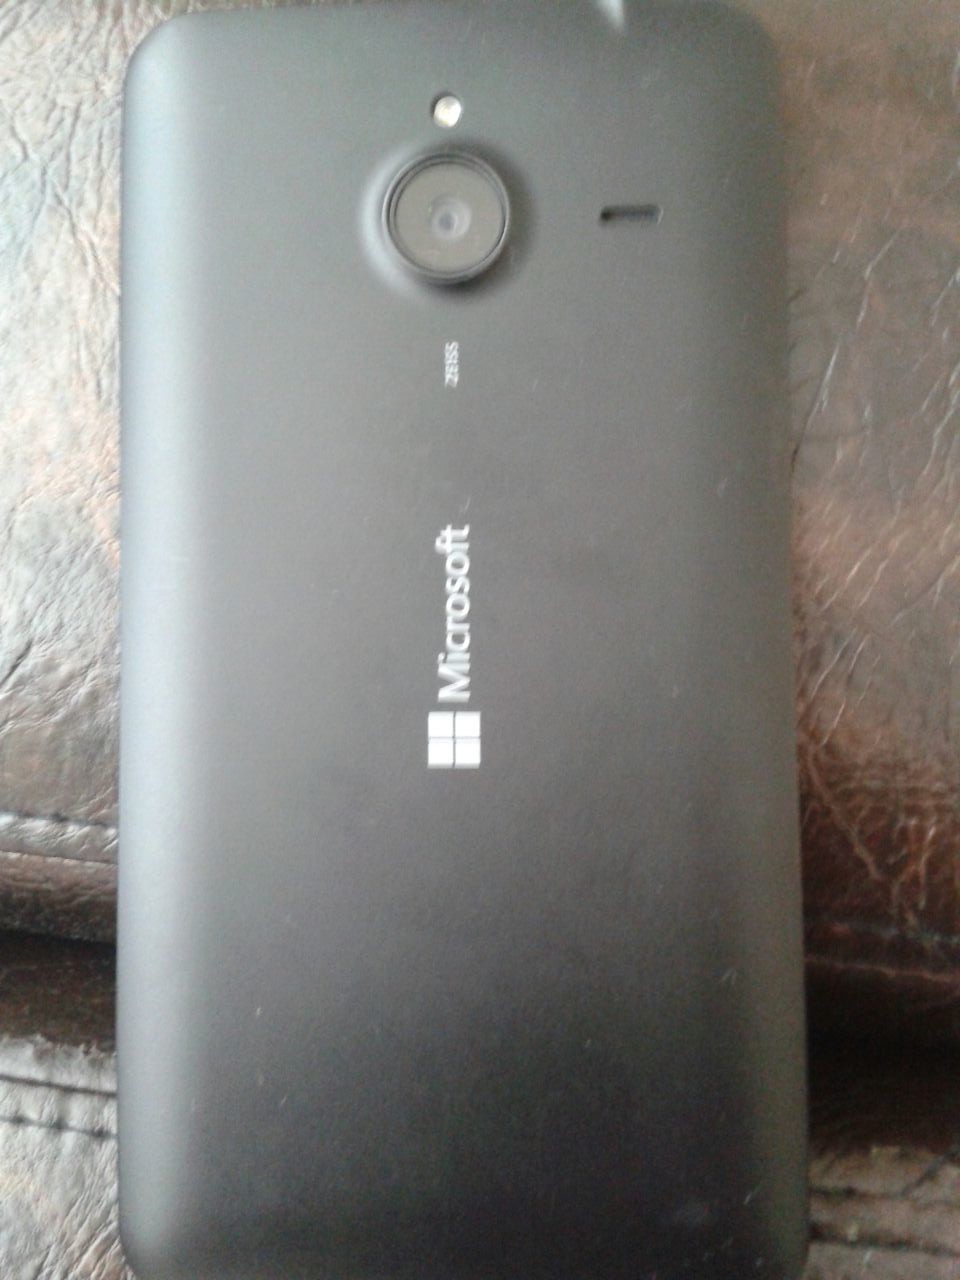  Lumia 640 XL LTE (Kasmayan Telefon)